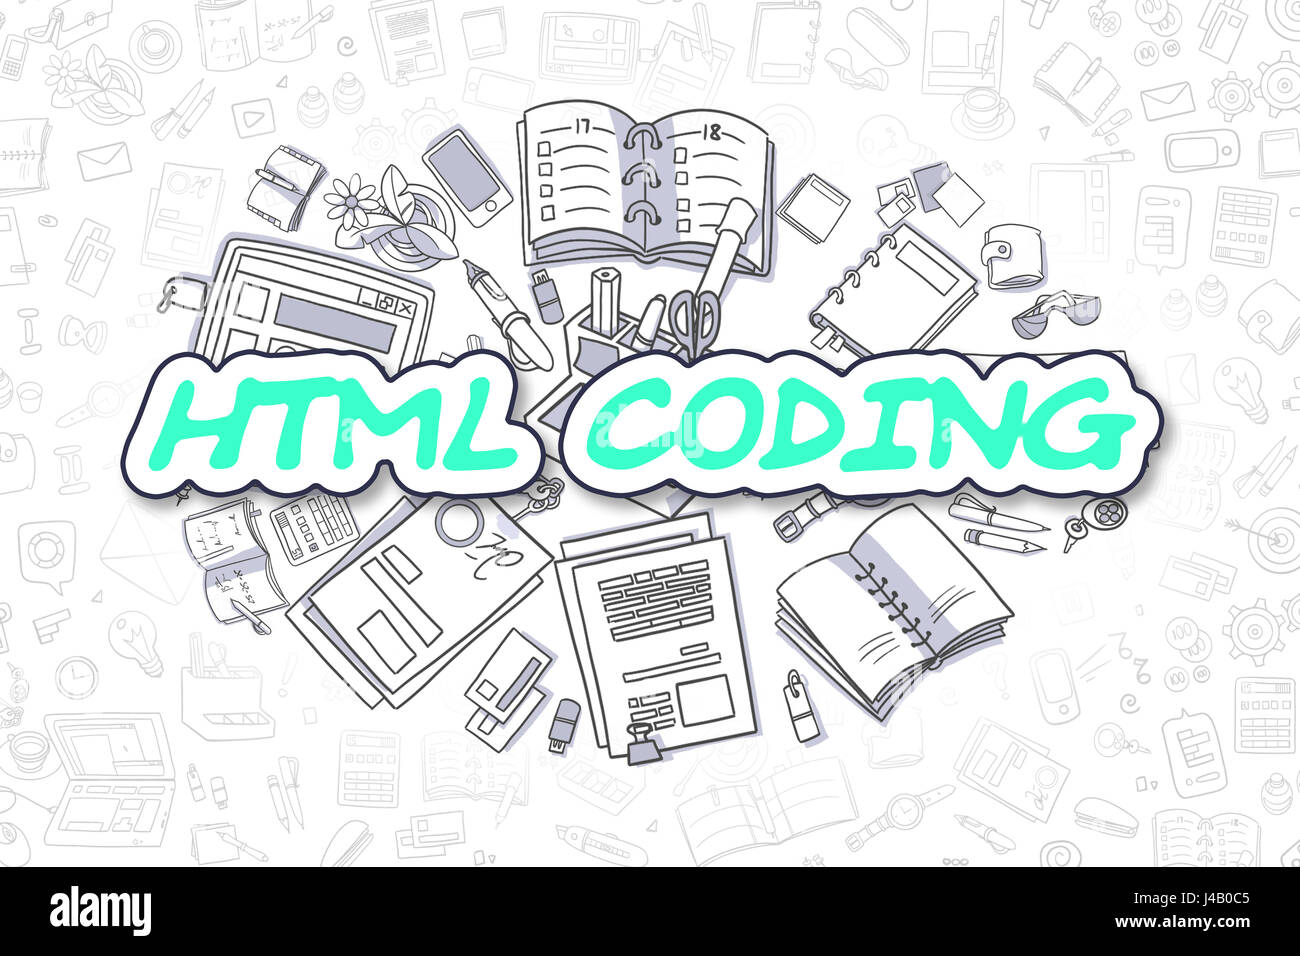 HTML Coding - Cartoon Green Word. Business Concept. Stock Photo